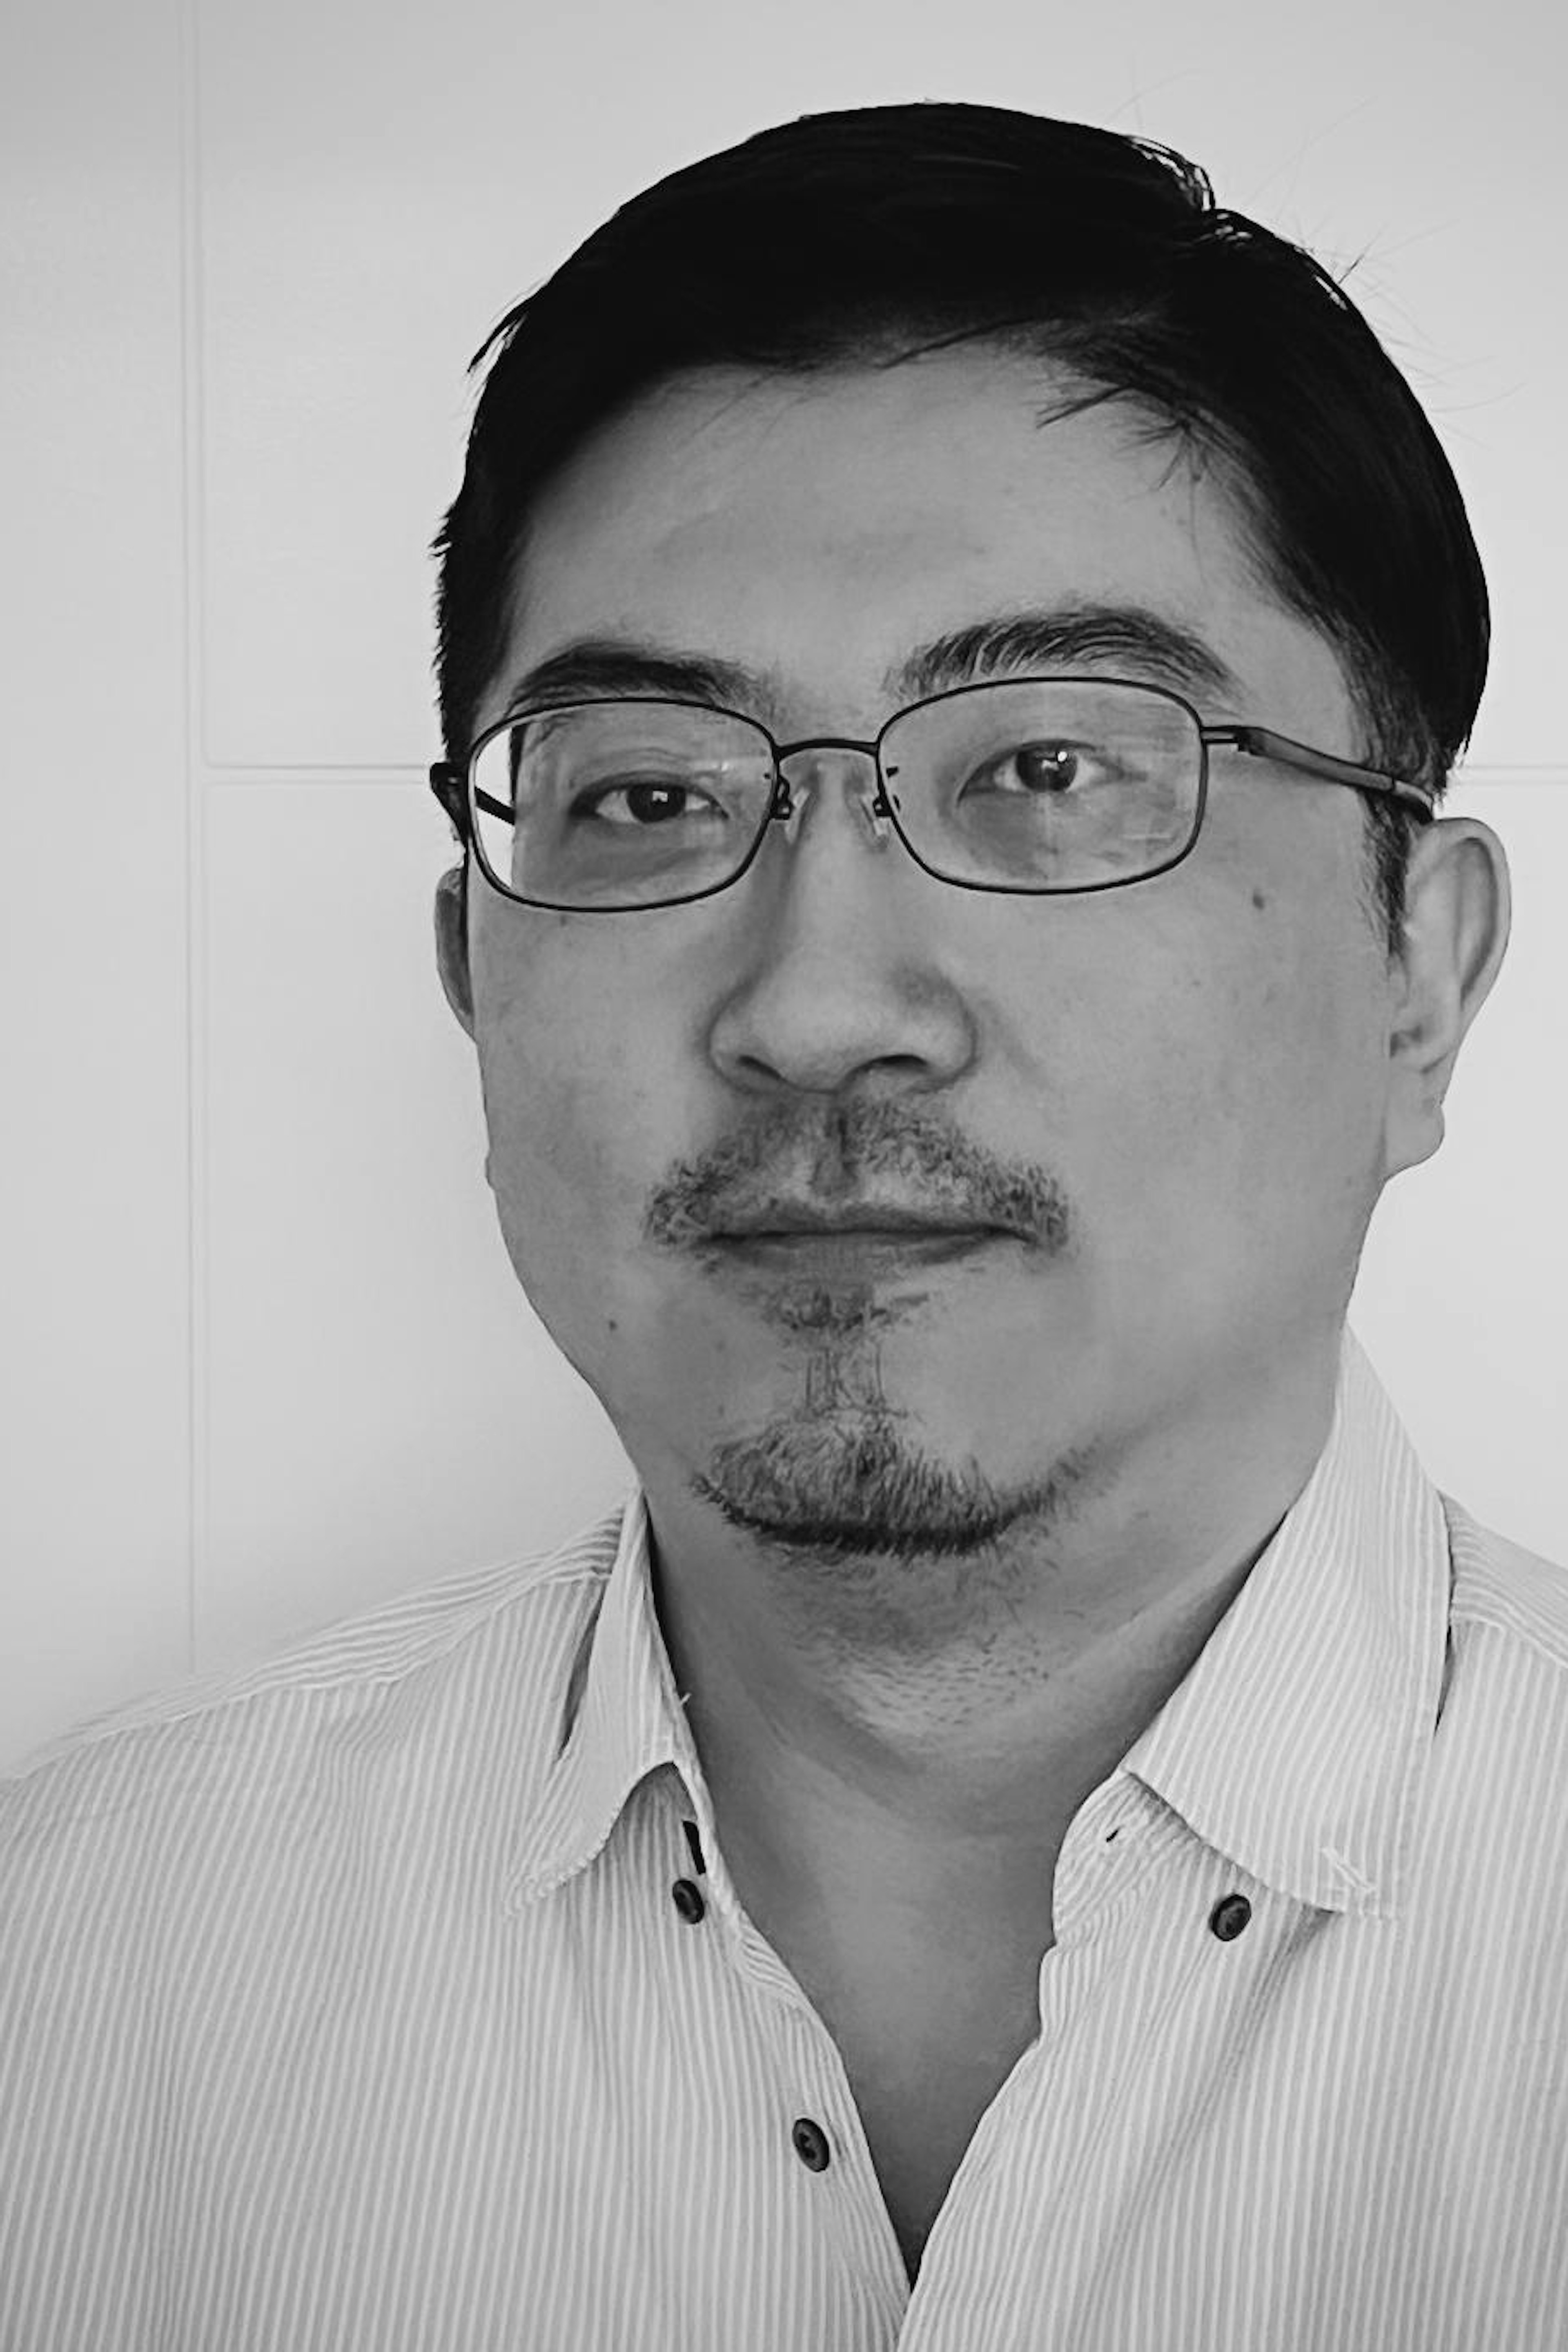 The Embassy Appoints Steve Woo as Head of Studio